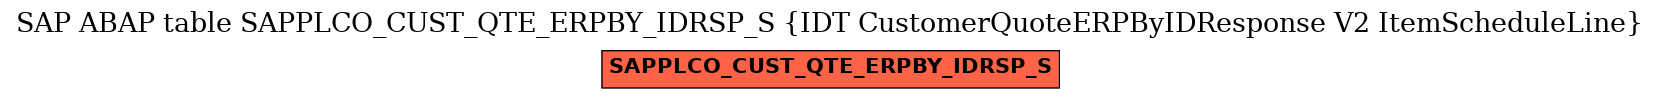 E-R Diagram for table SAPPLCO_CUST_QTE_ERPBY_IDRSP_S (IDT CustomerQuoteERPByIDResponse V2 ItemScheduleLine)